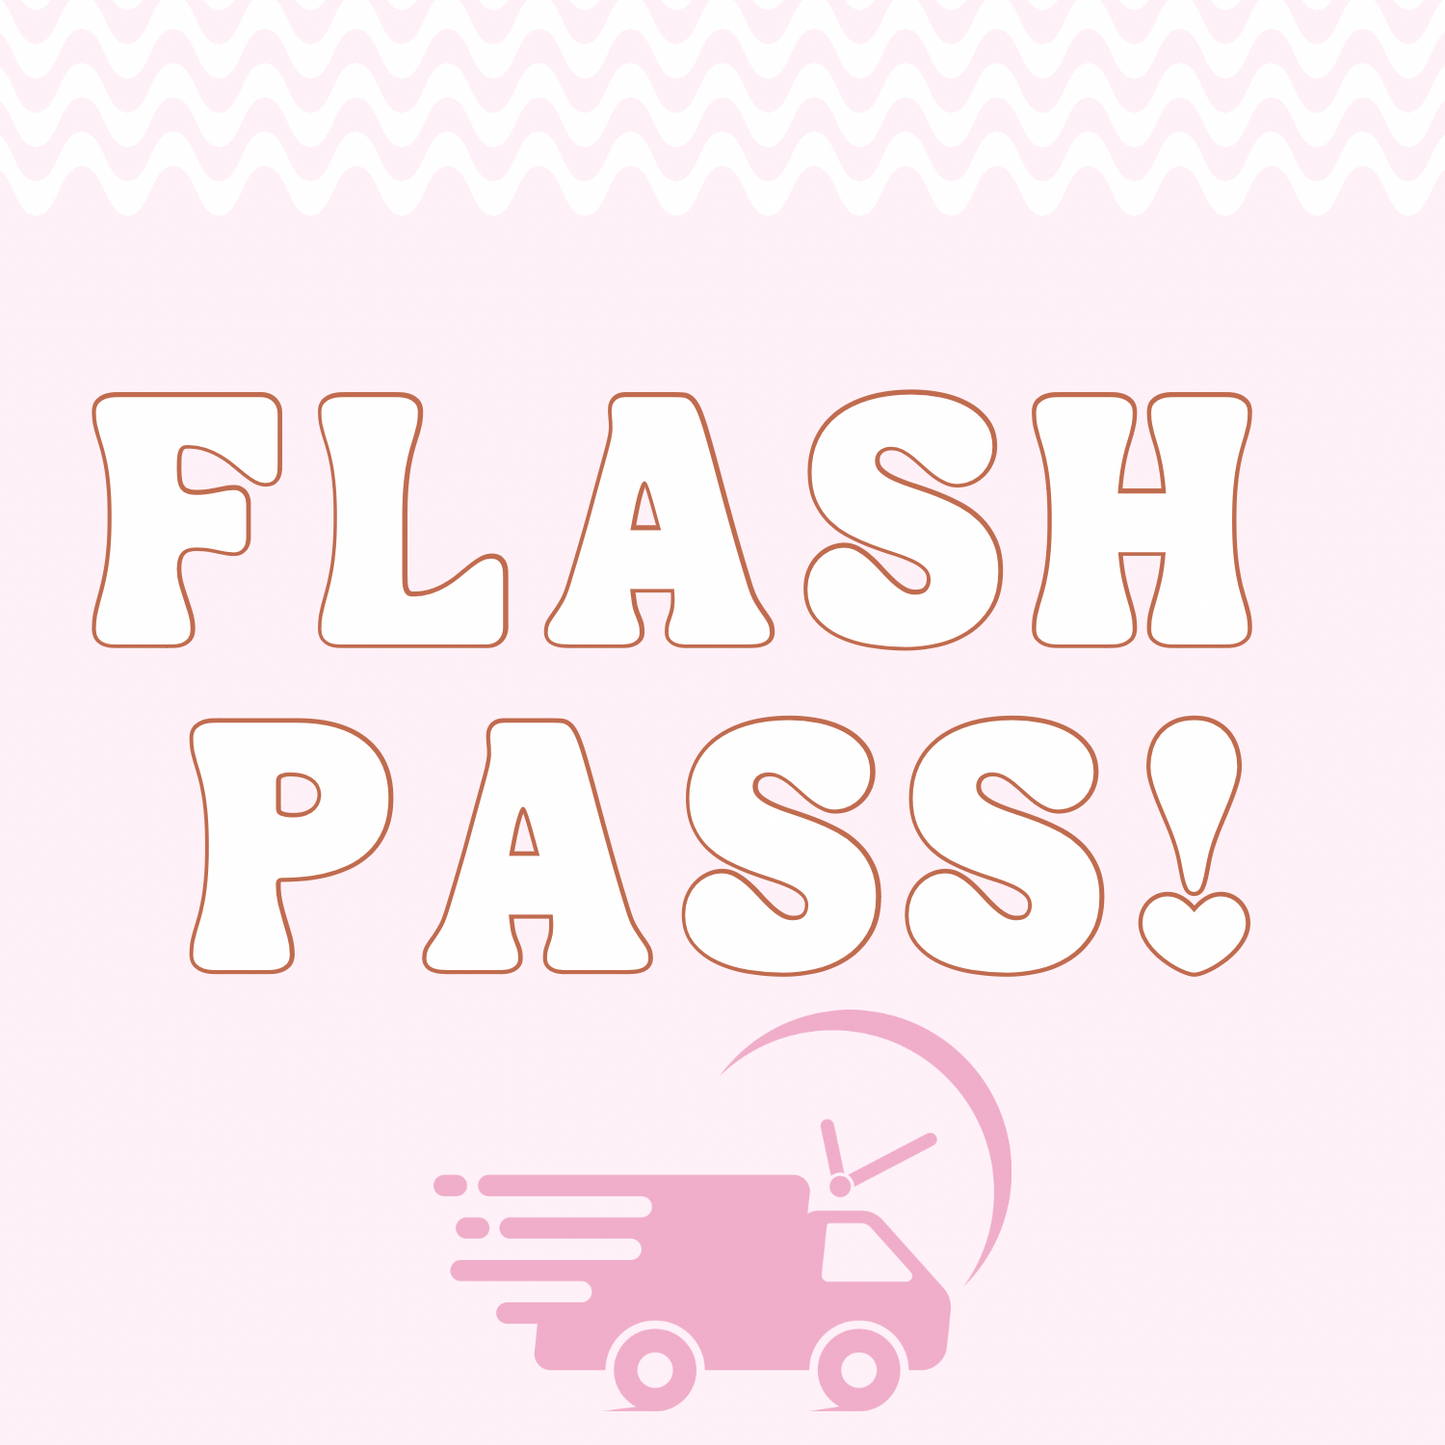 Flash Pass